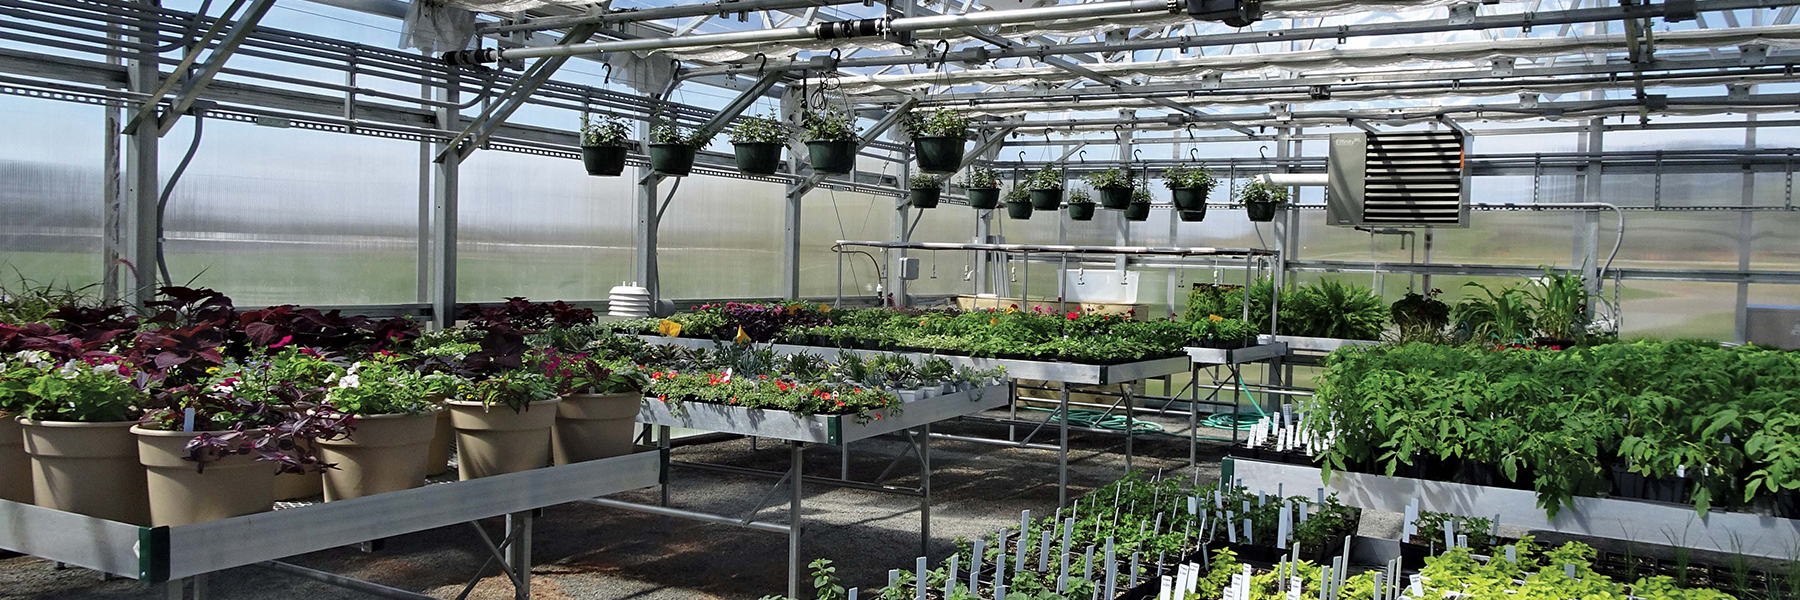 Chippewa Valley Premium Greenhouse